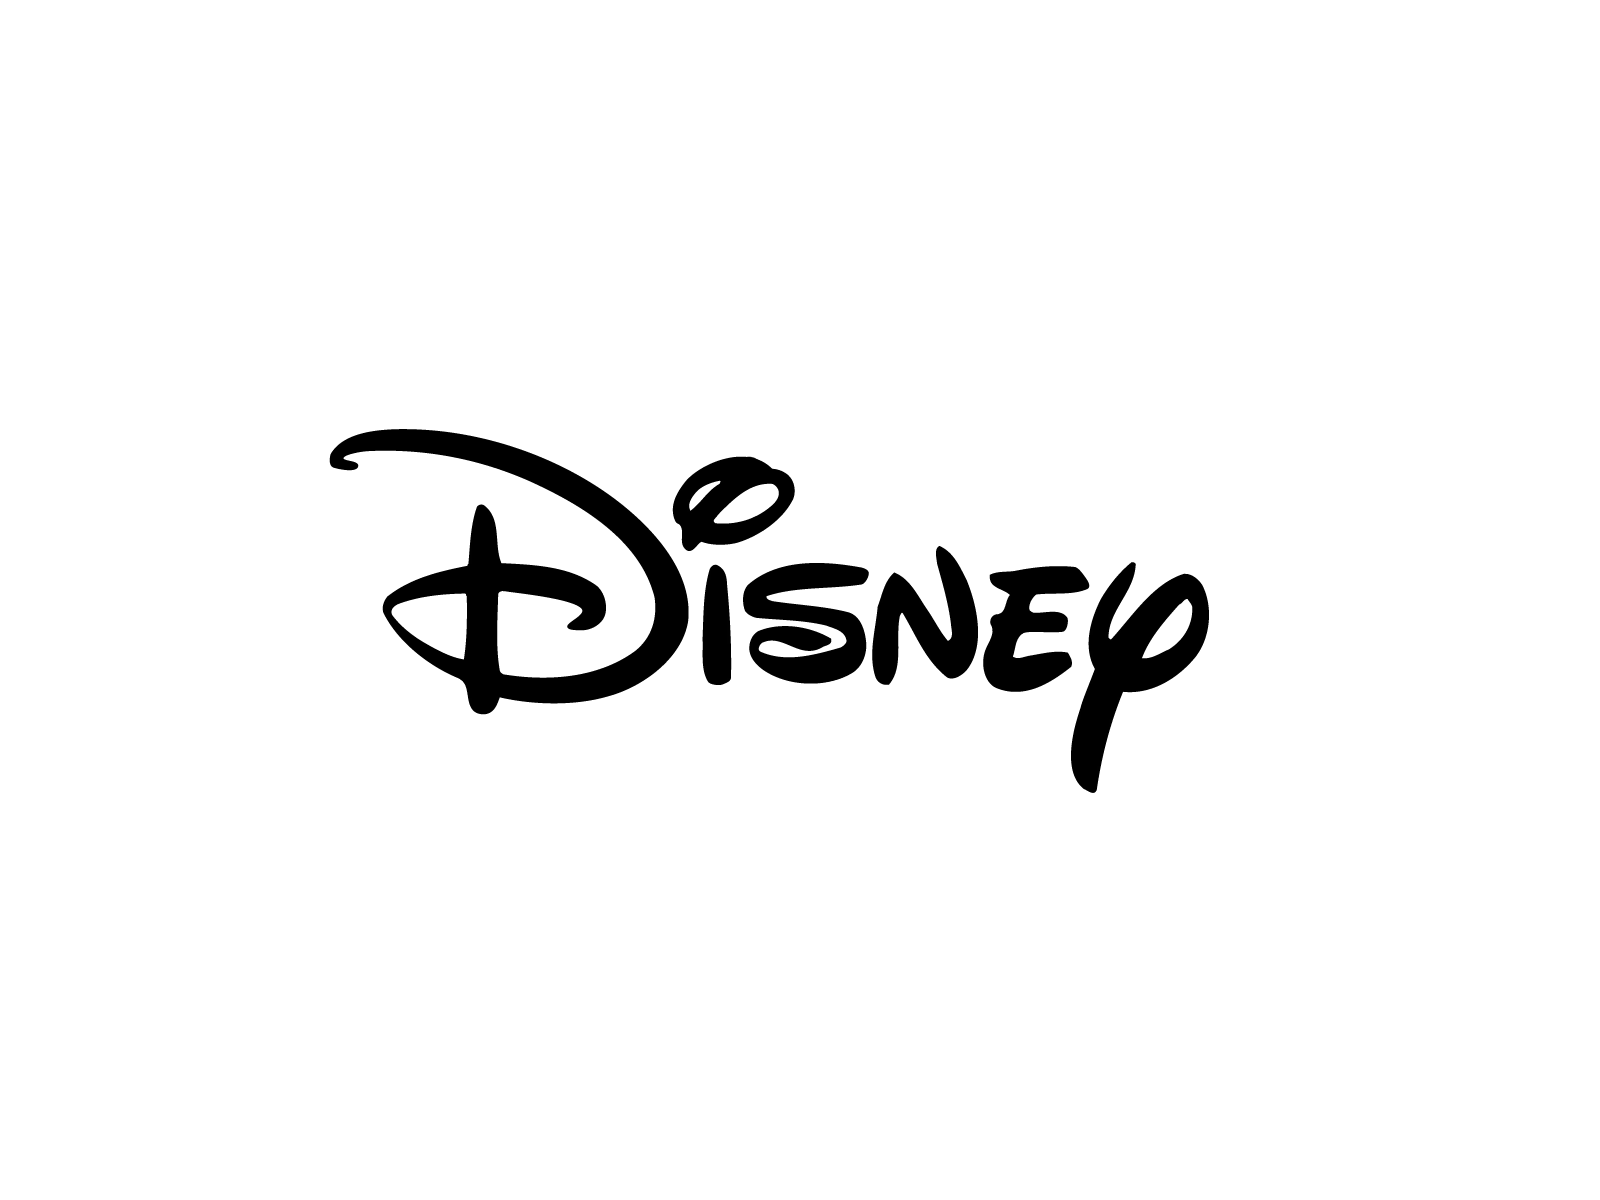 Disney Logo Animation